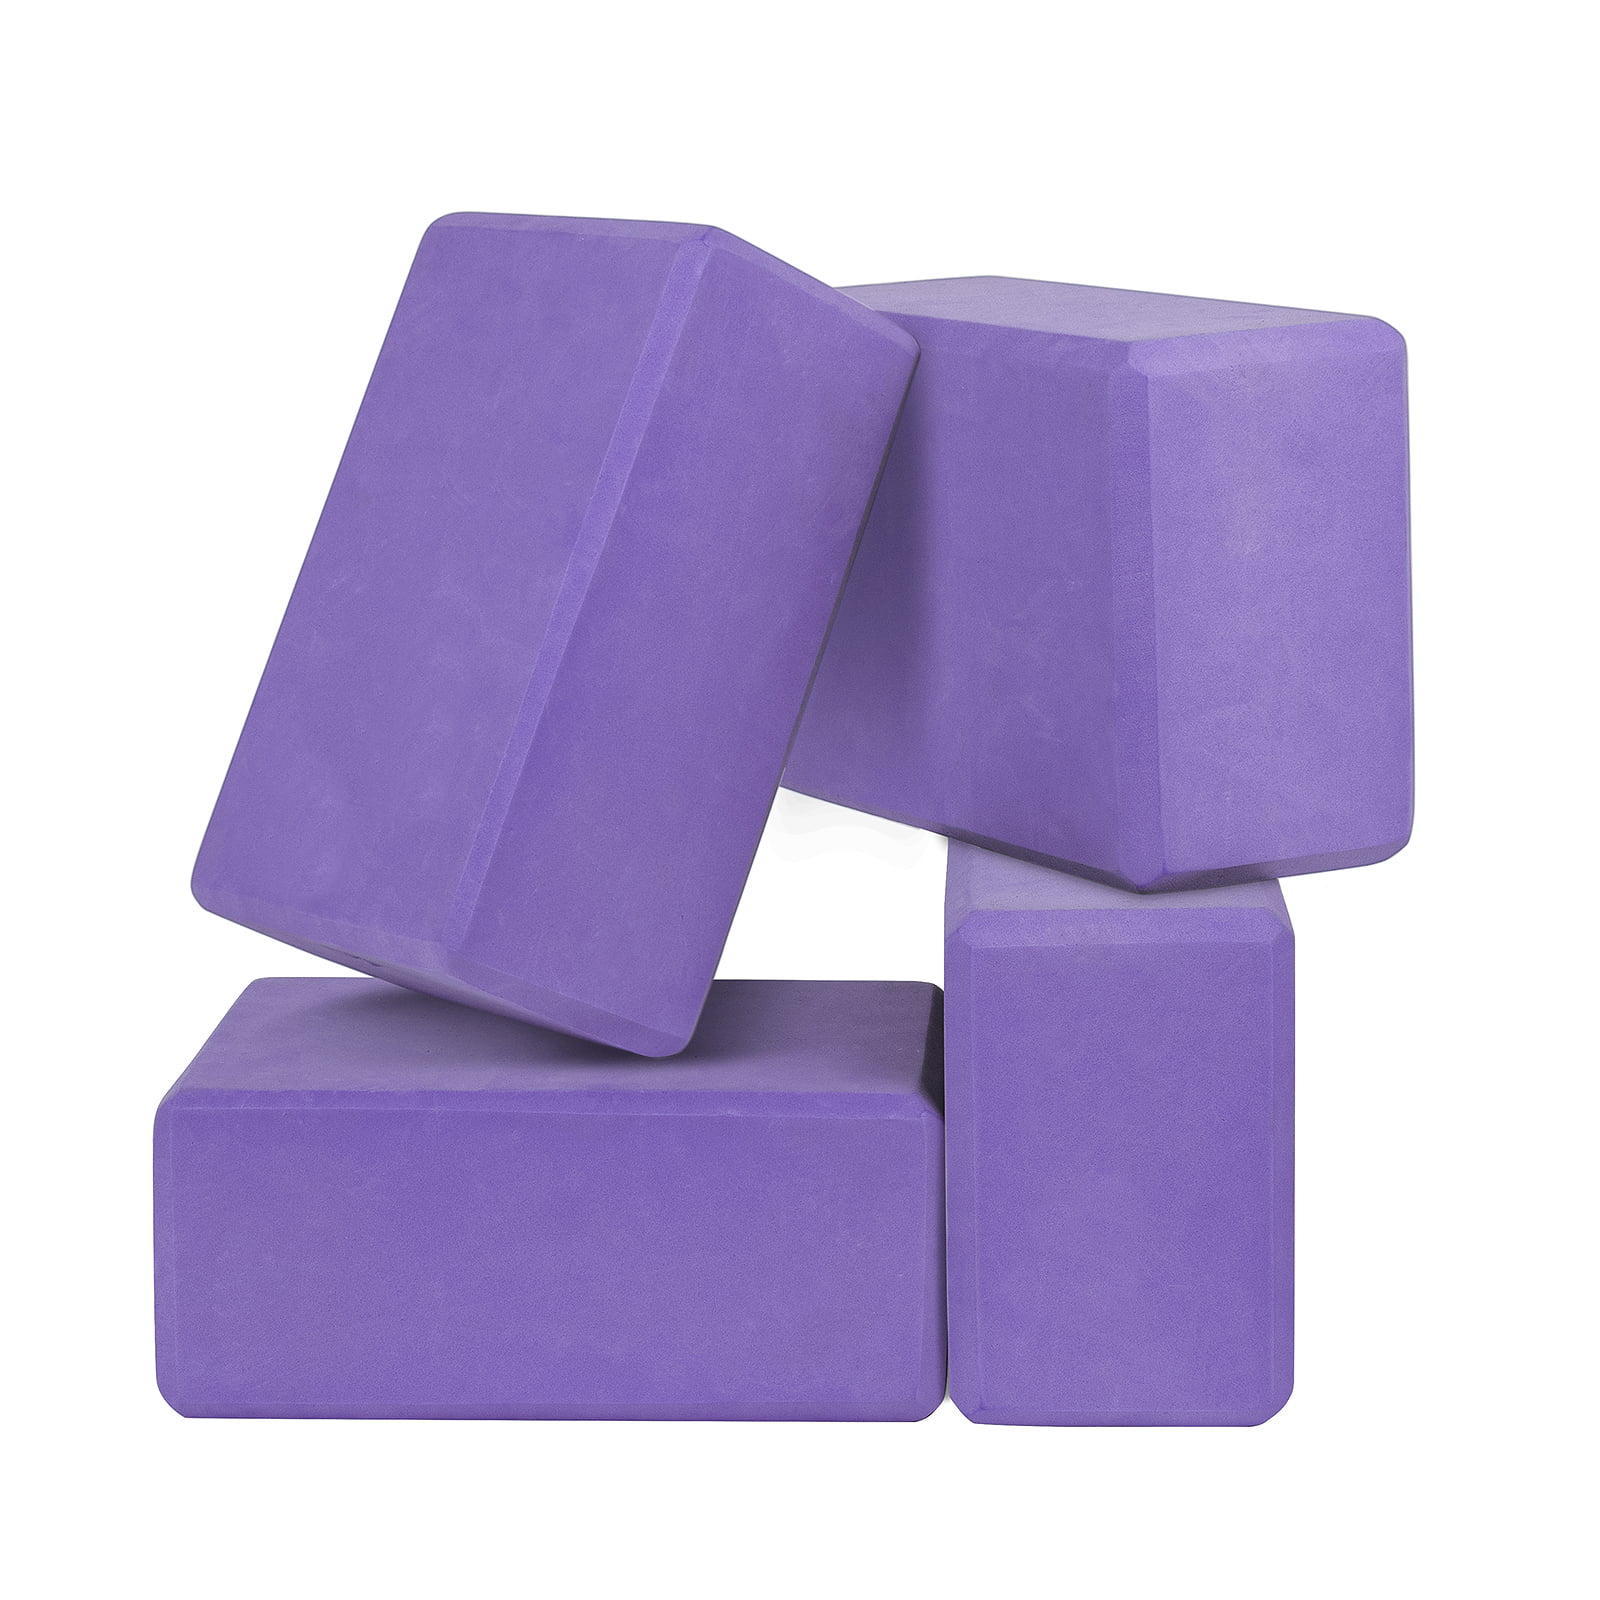 bheka Premium 4-inch Foam Blocks